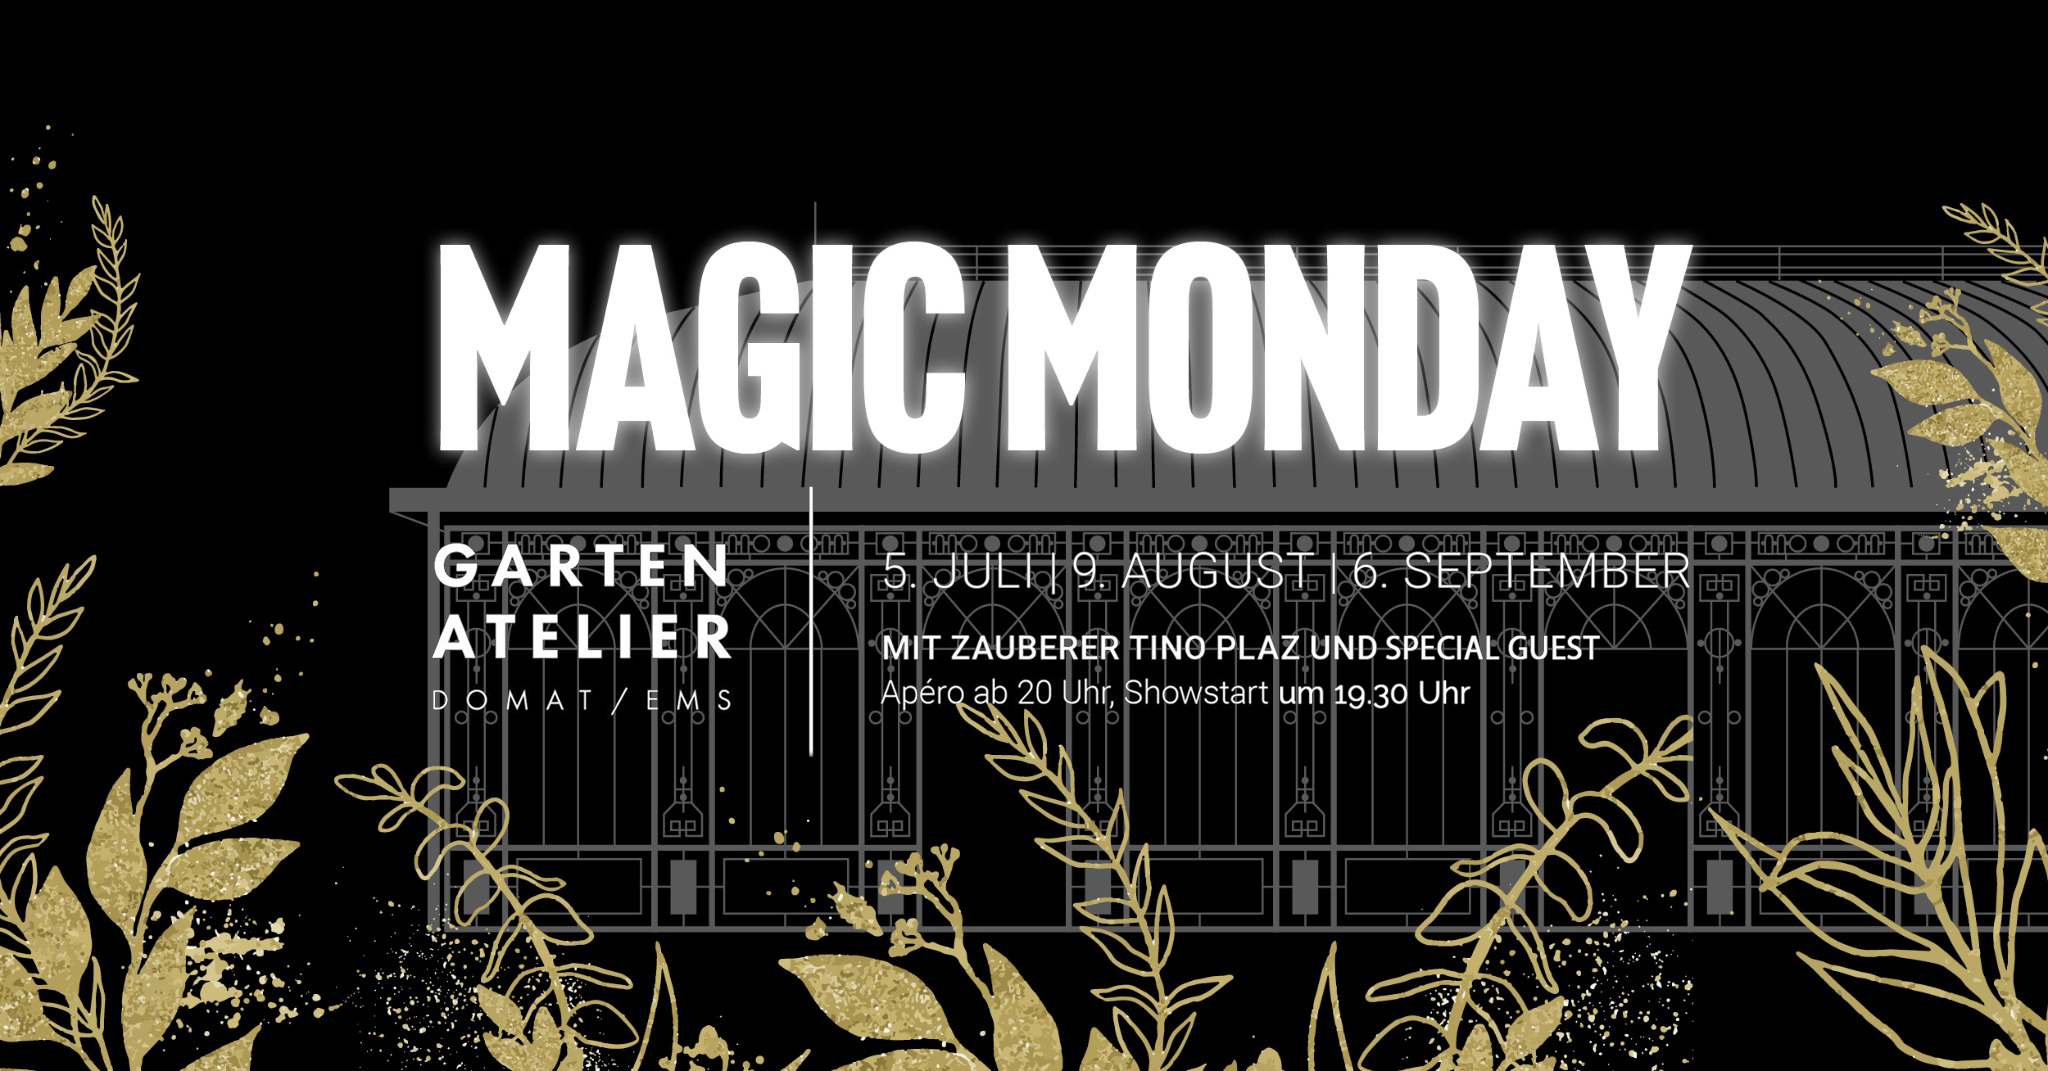 Magic Monday Domat/Ems